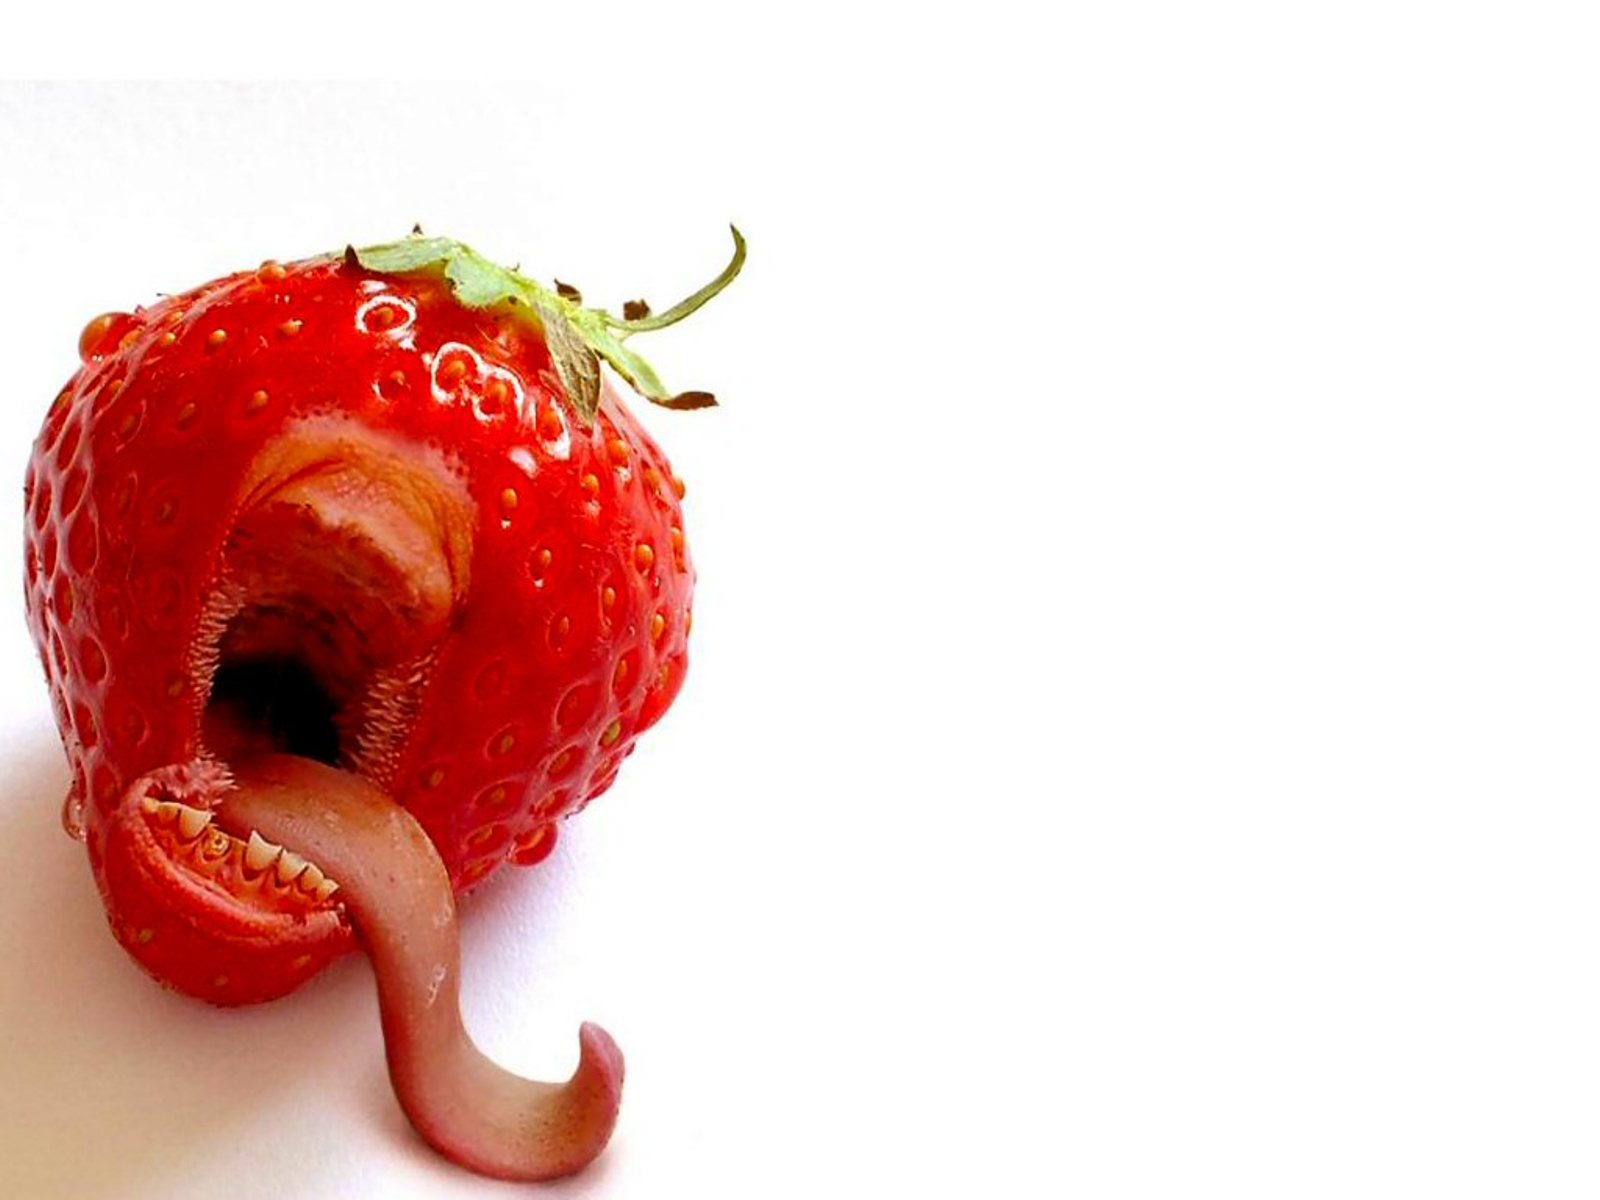 HD desktop wallpaper: Fruits, Food, Strawberry download free picture #521012